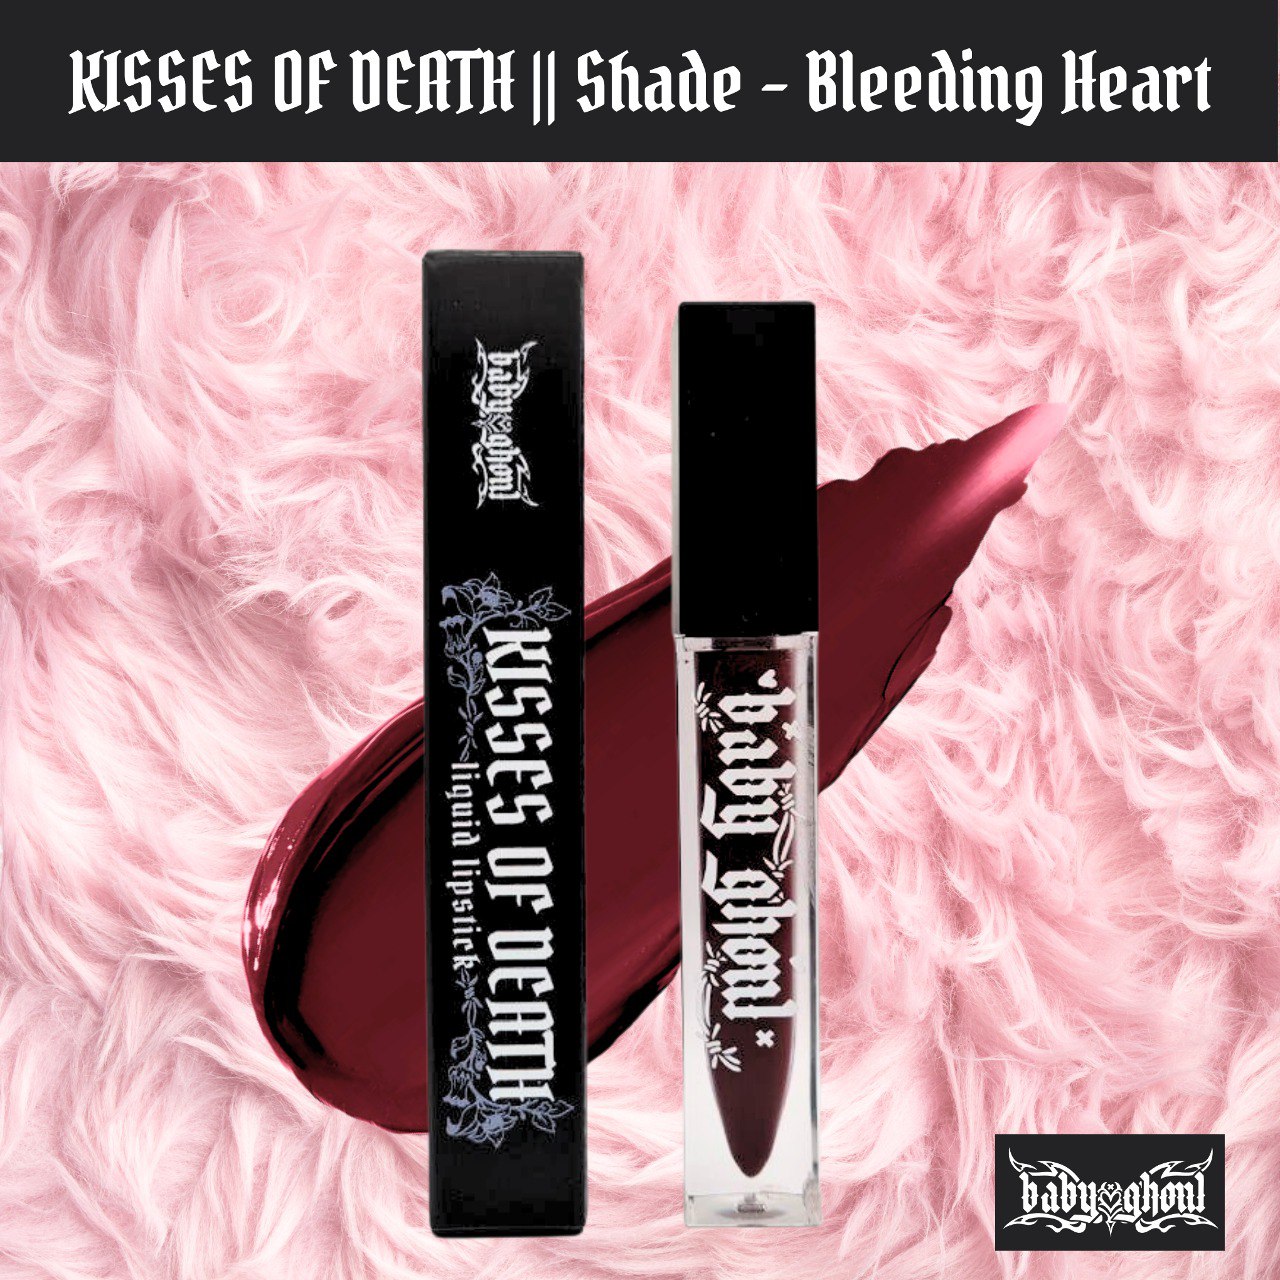 Kisses of Death Liquid Lipstick - Bleeding Heart